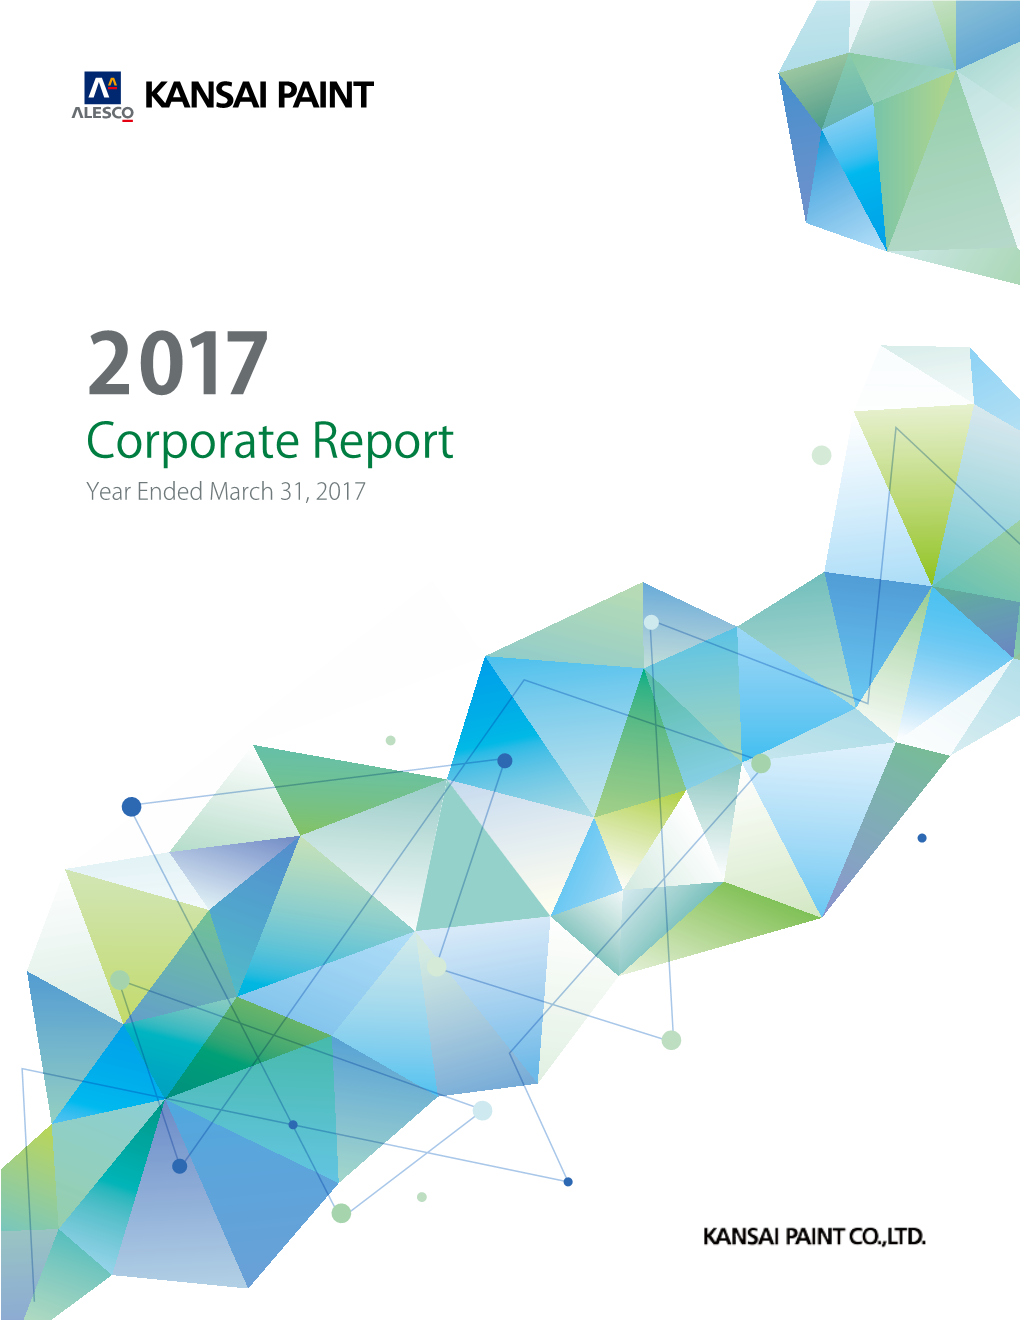 Download Corporate Report 2017